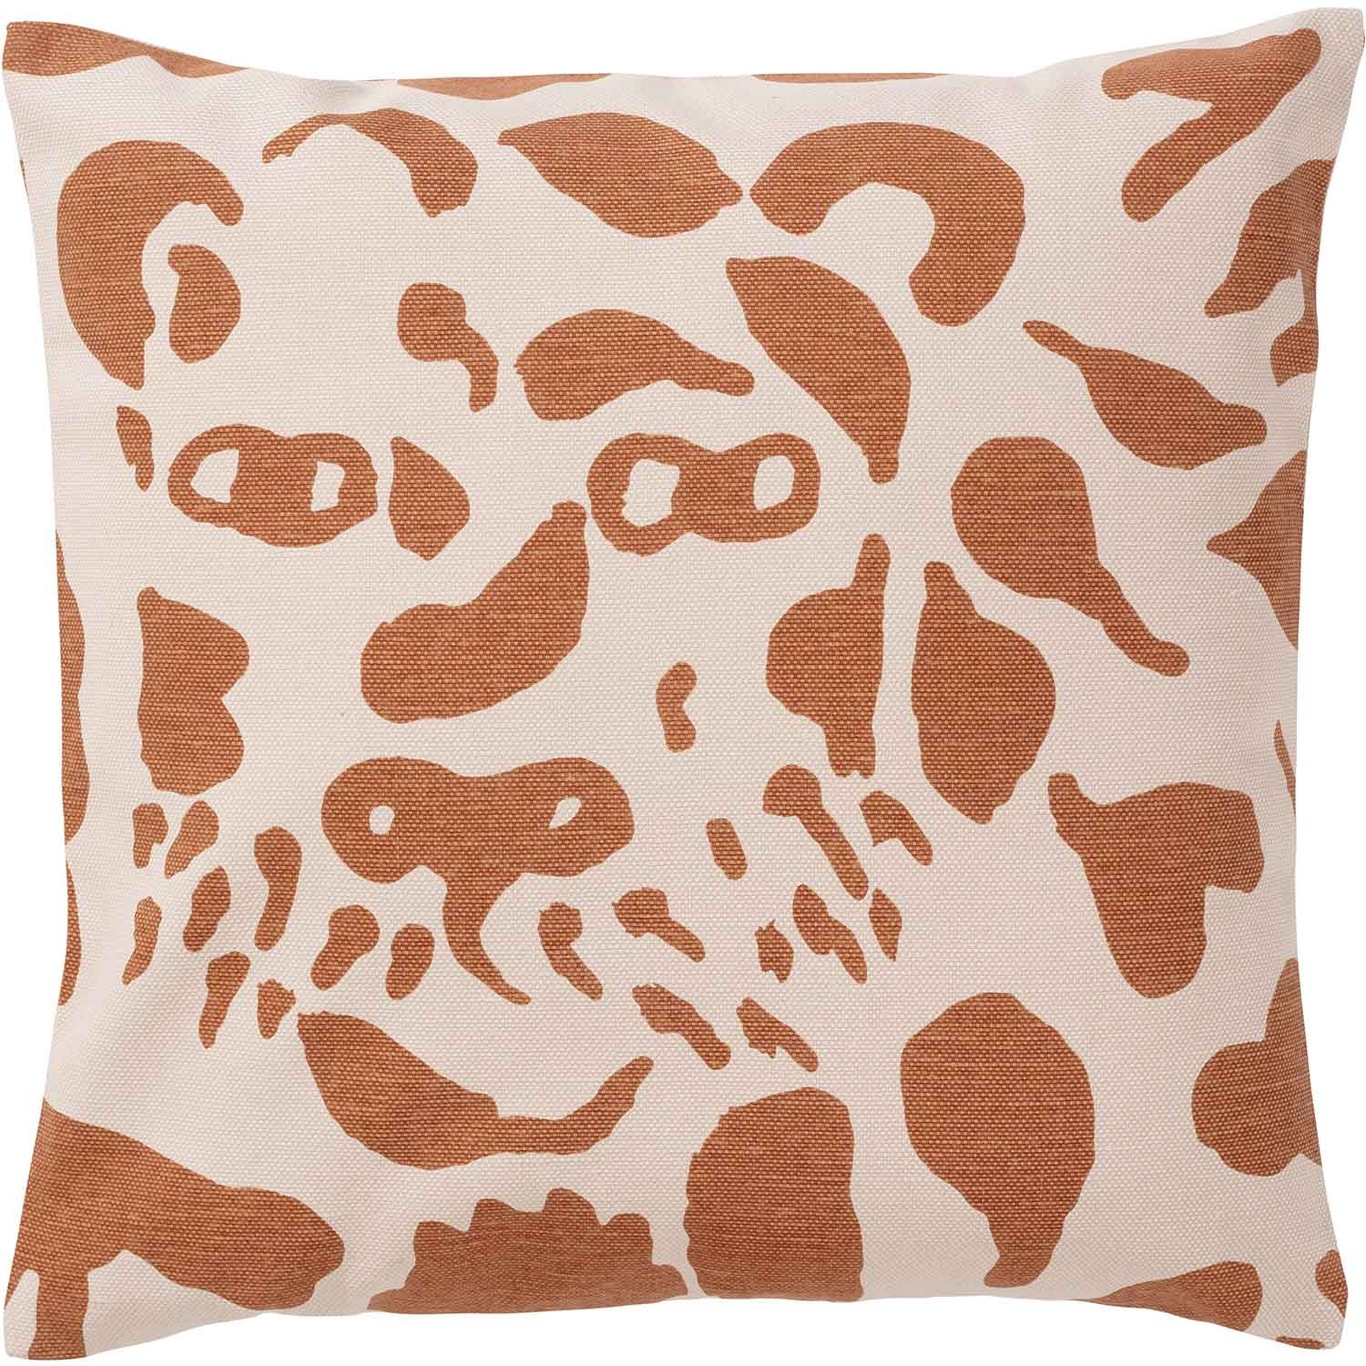 Oiva Toikka Collection Cushion Cover 47x47 cm, Cheetah Brown